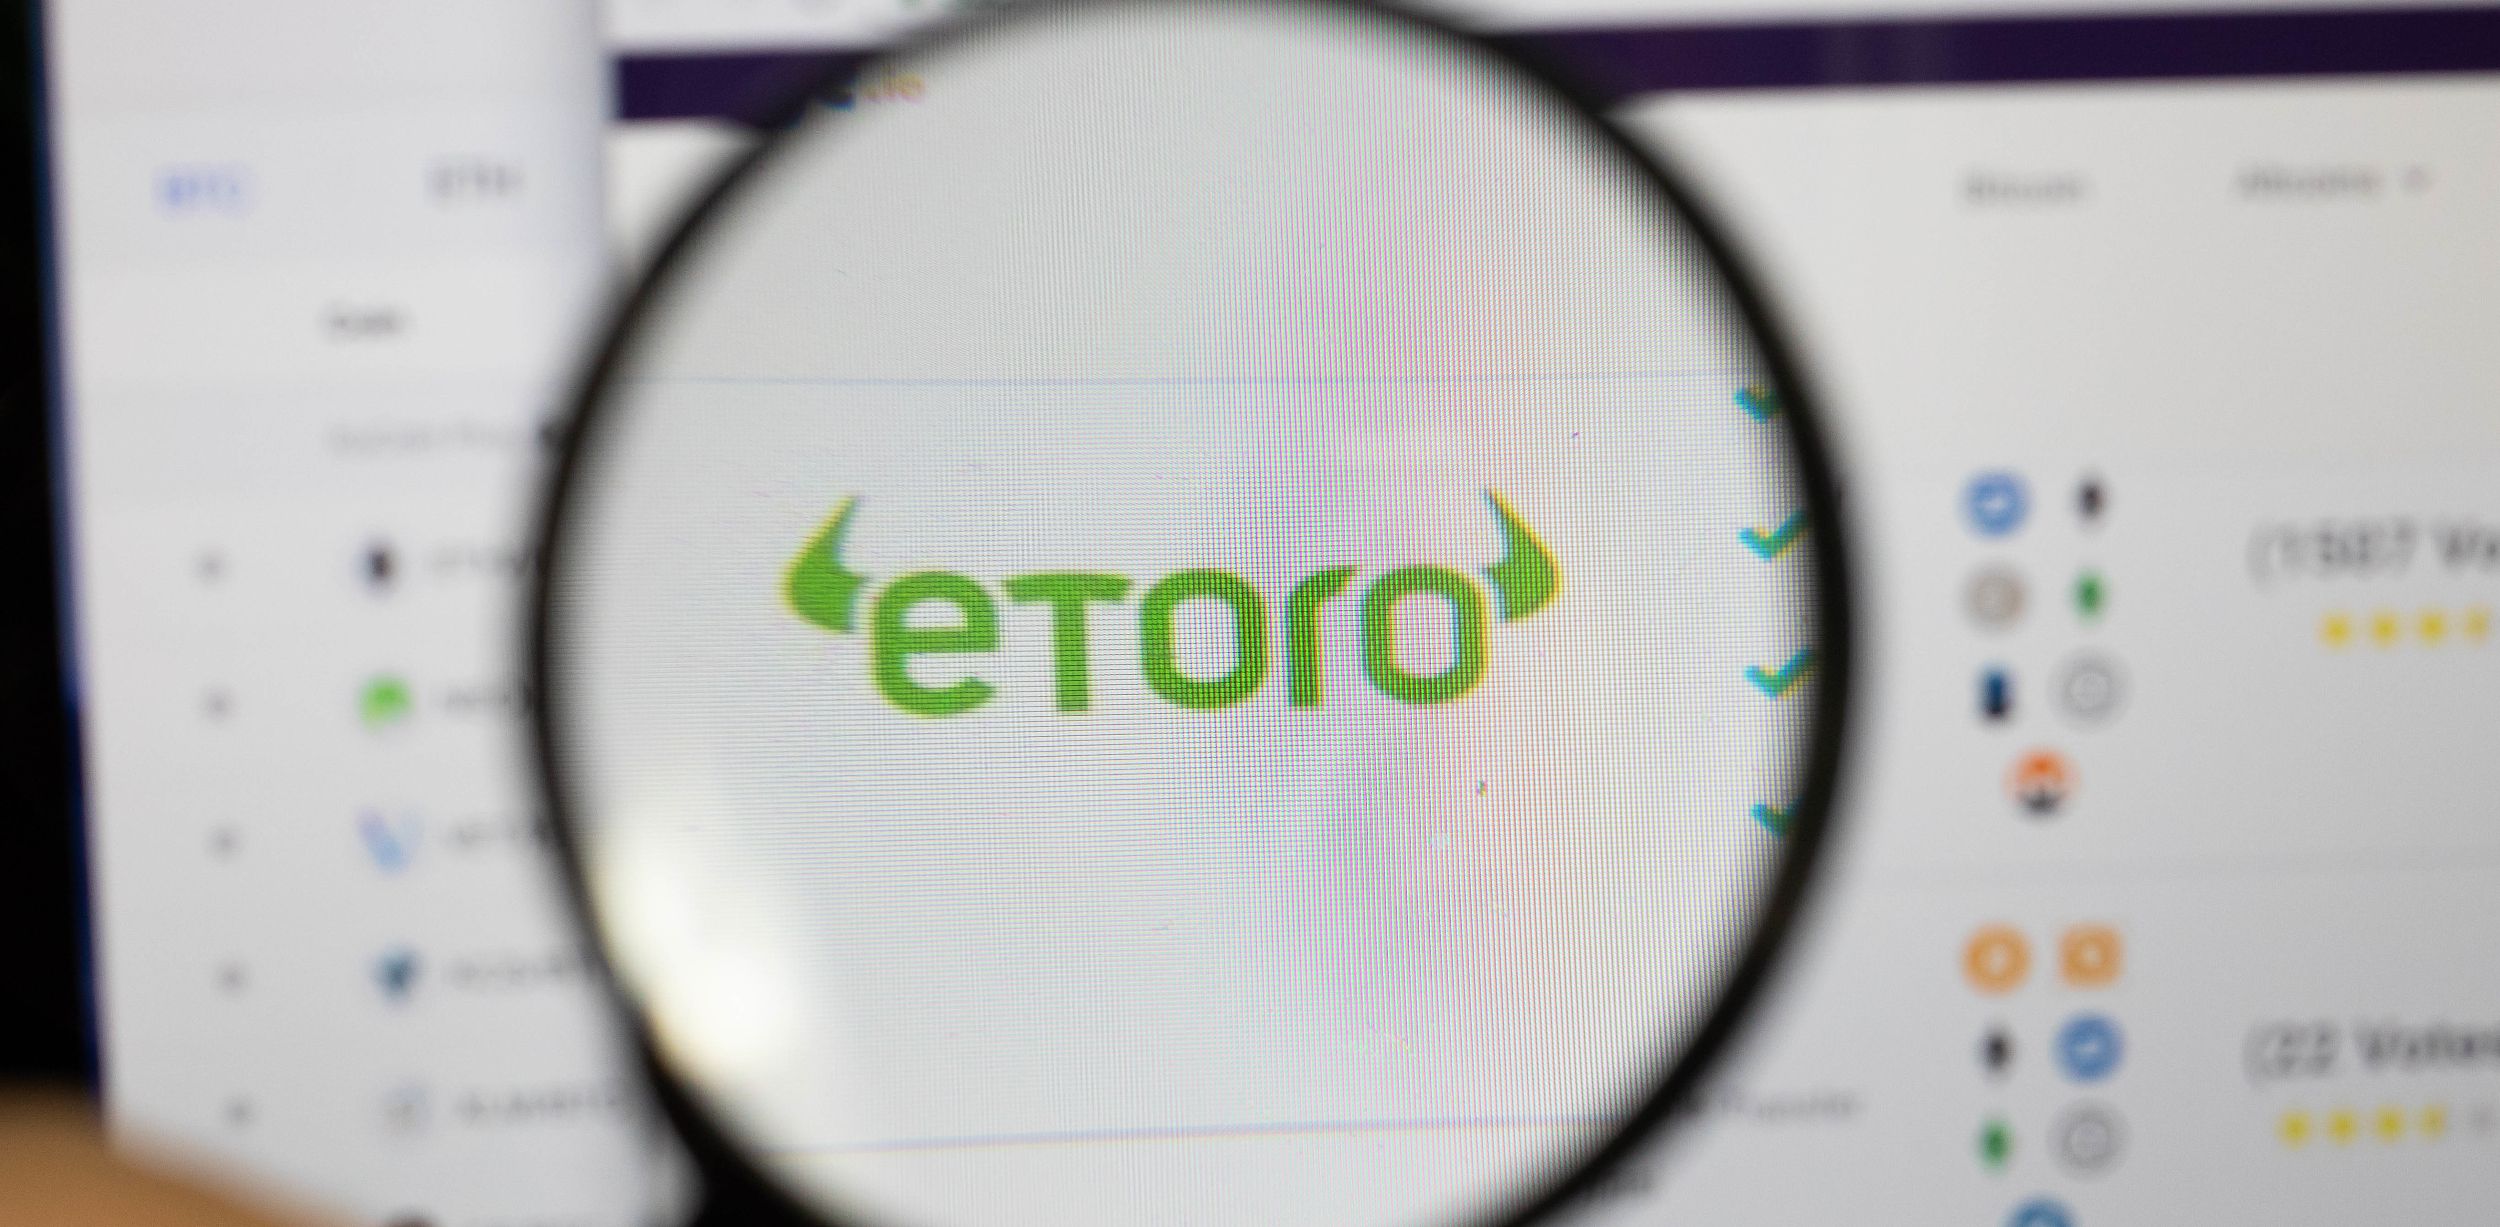 etoro exchange logo on computer screen